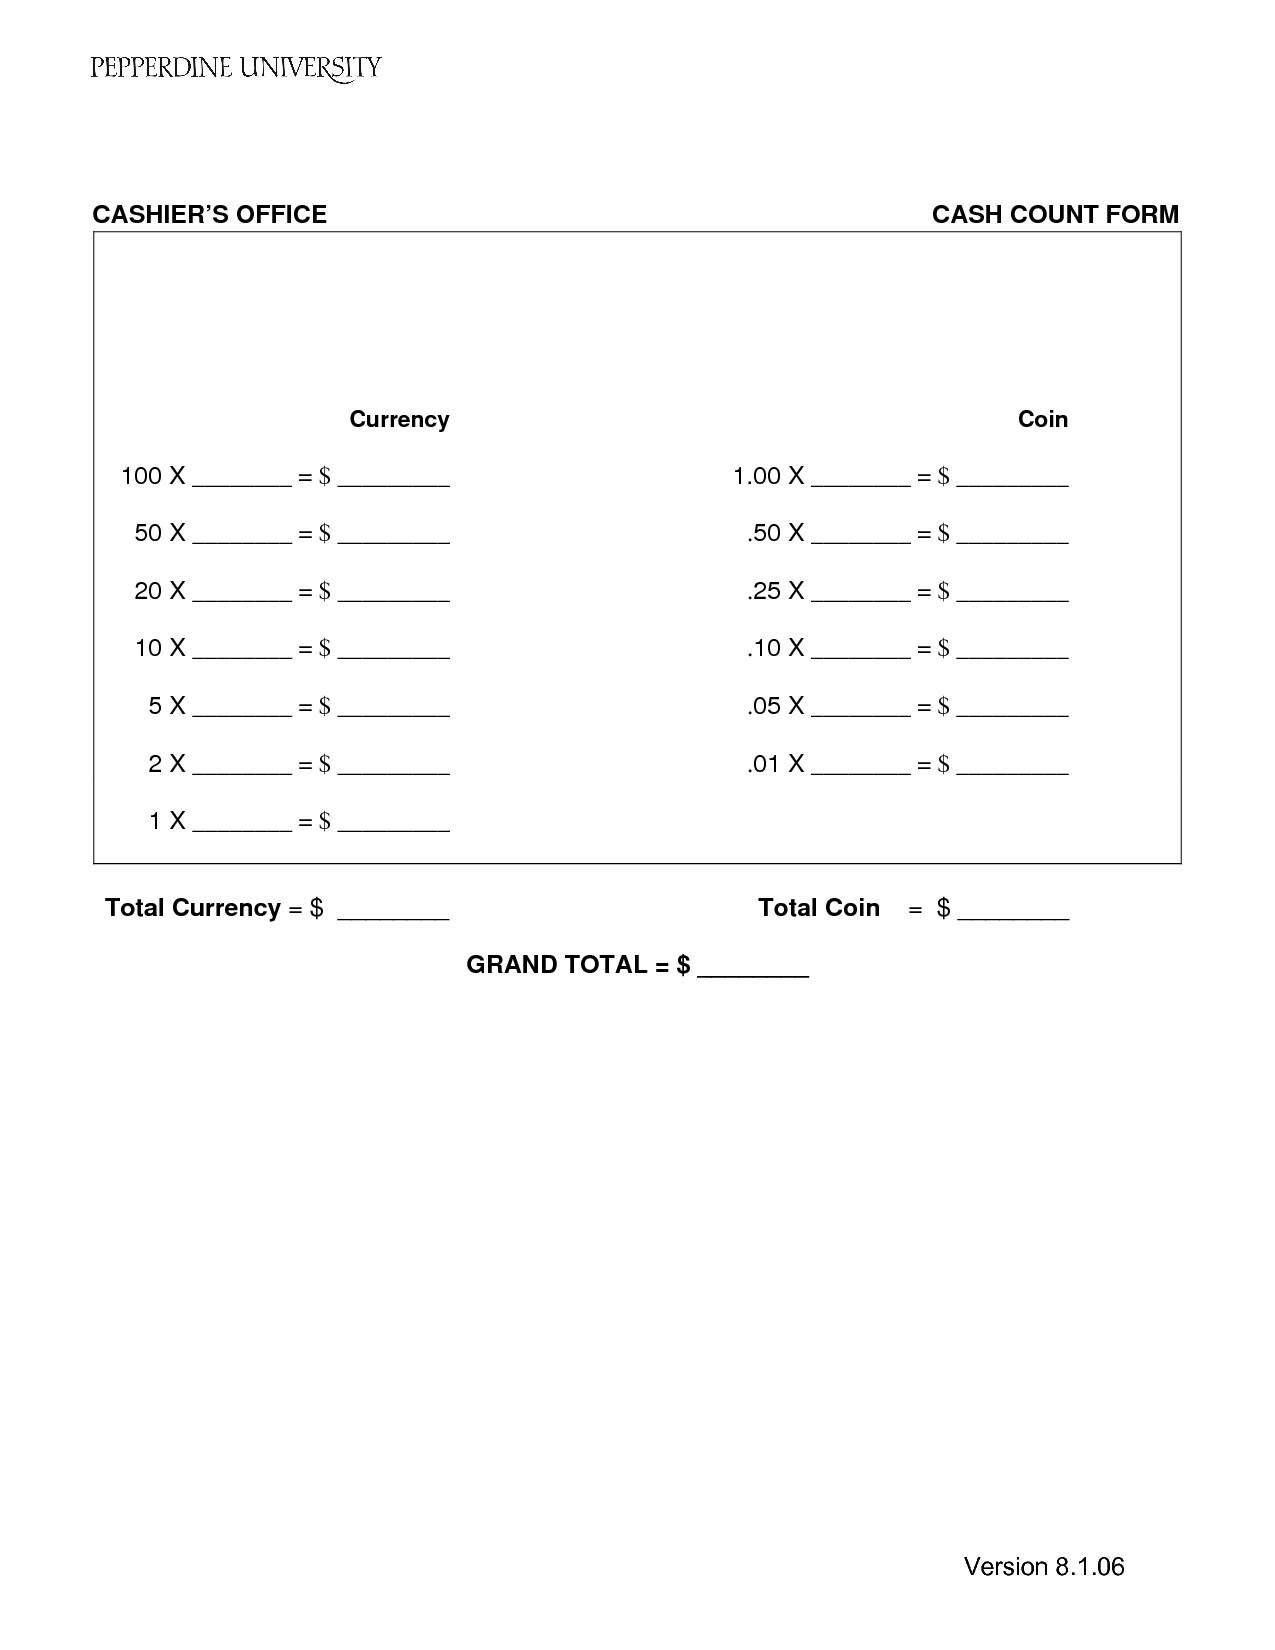 Cash Drawer Count Sheet Template Cash Count Sheet Template